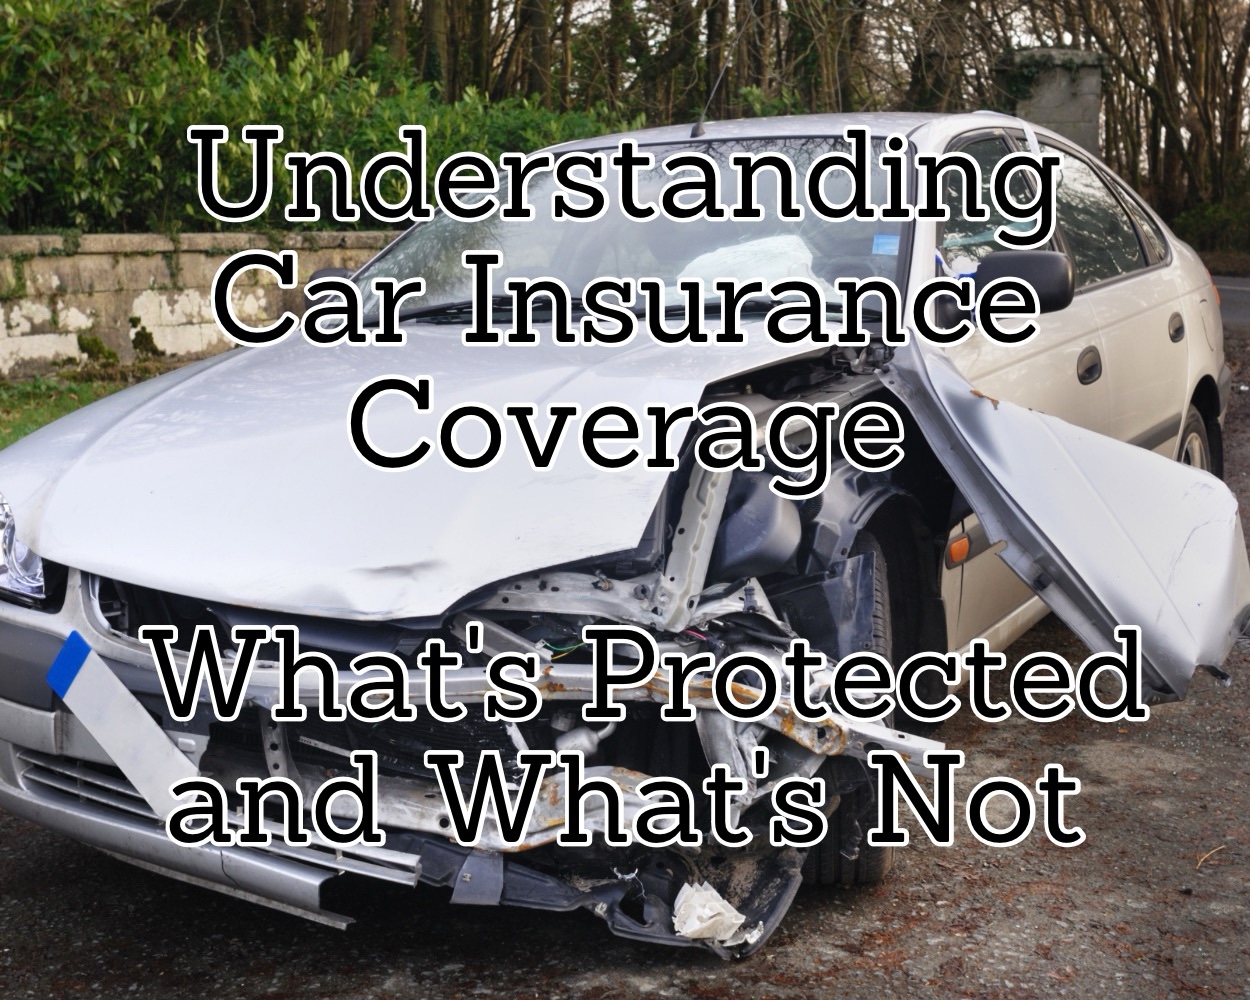 Insurance Secrets Revealed: Maximize Coverage, Minimize Costs